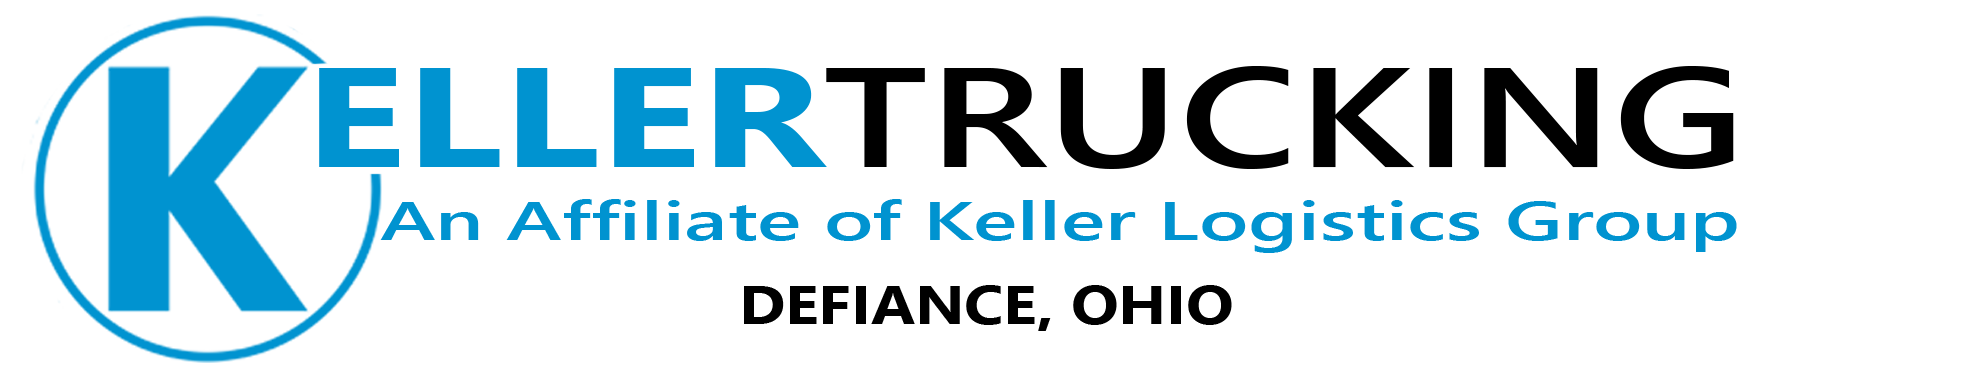 Keller Trucking an Affiliate of Keller Logistics Group Defiance Ohio Logo